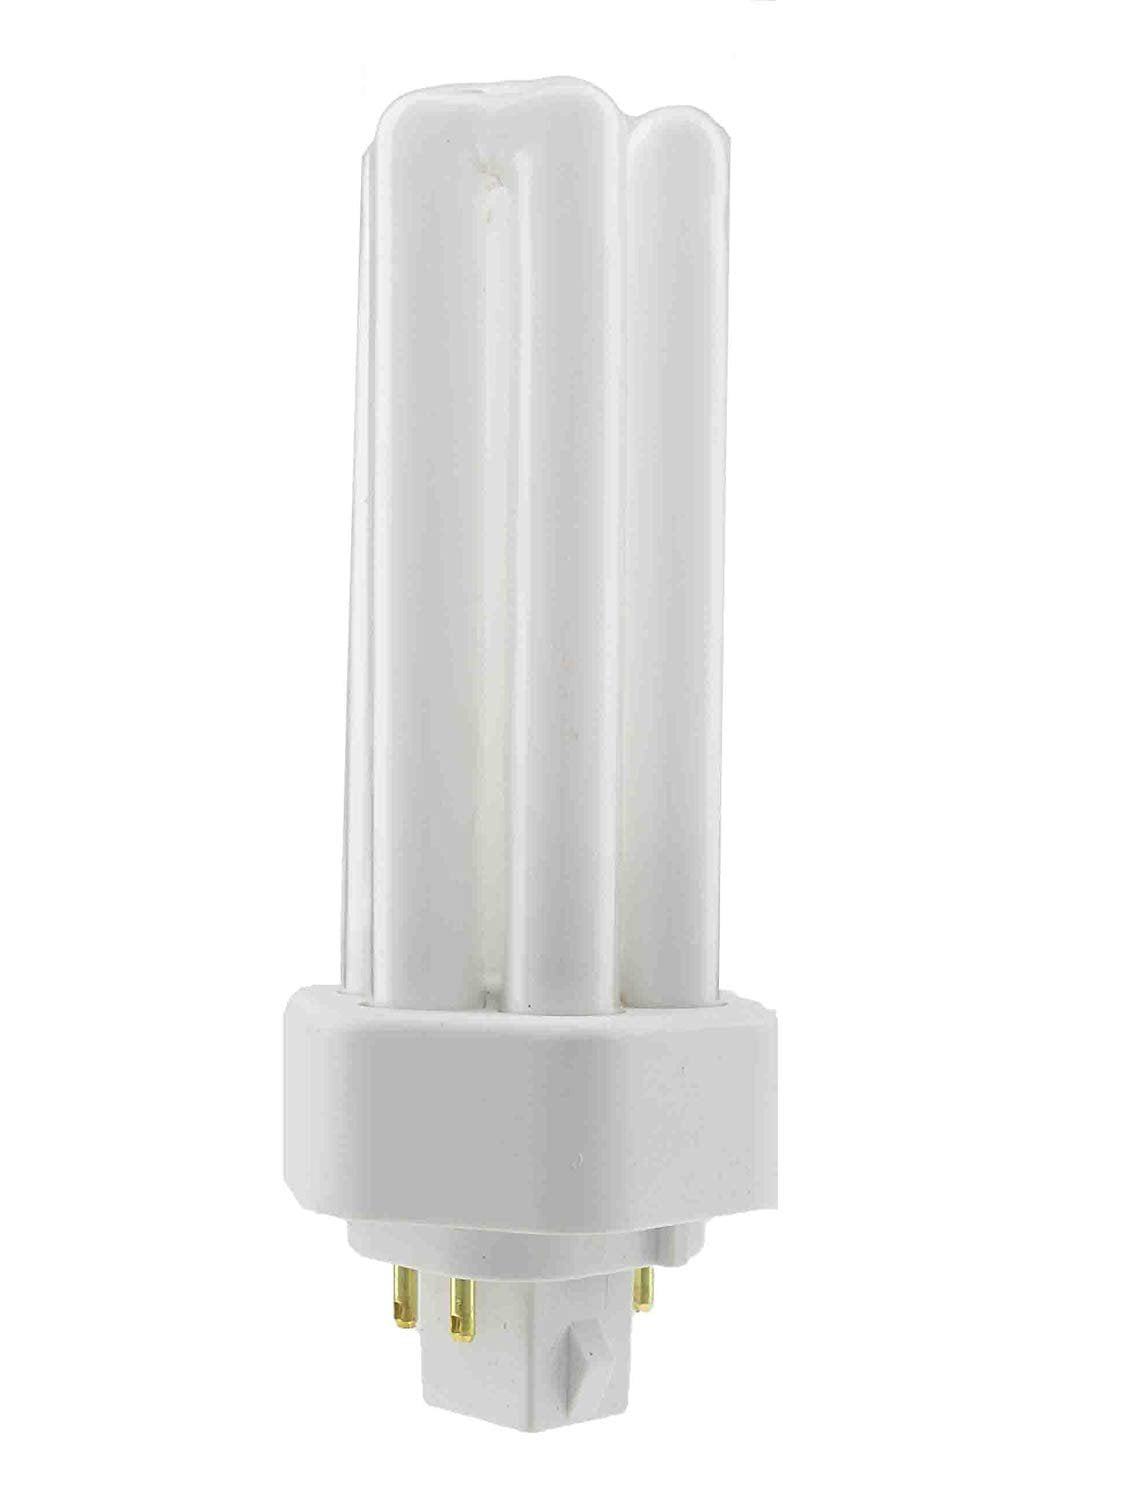 USHIO Compact Fluorescent CFL 7w CF7S/841 Light Bulb LOT of 2 